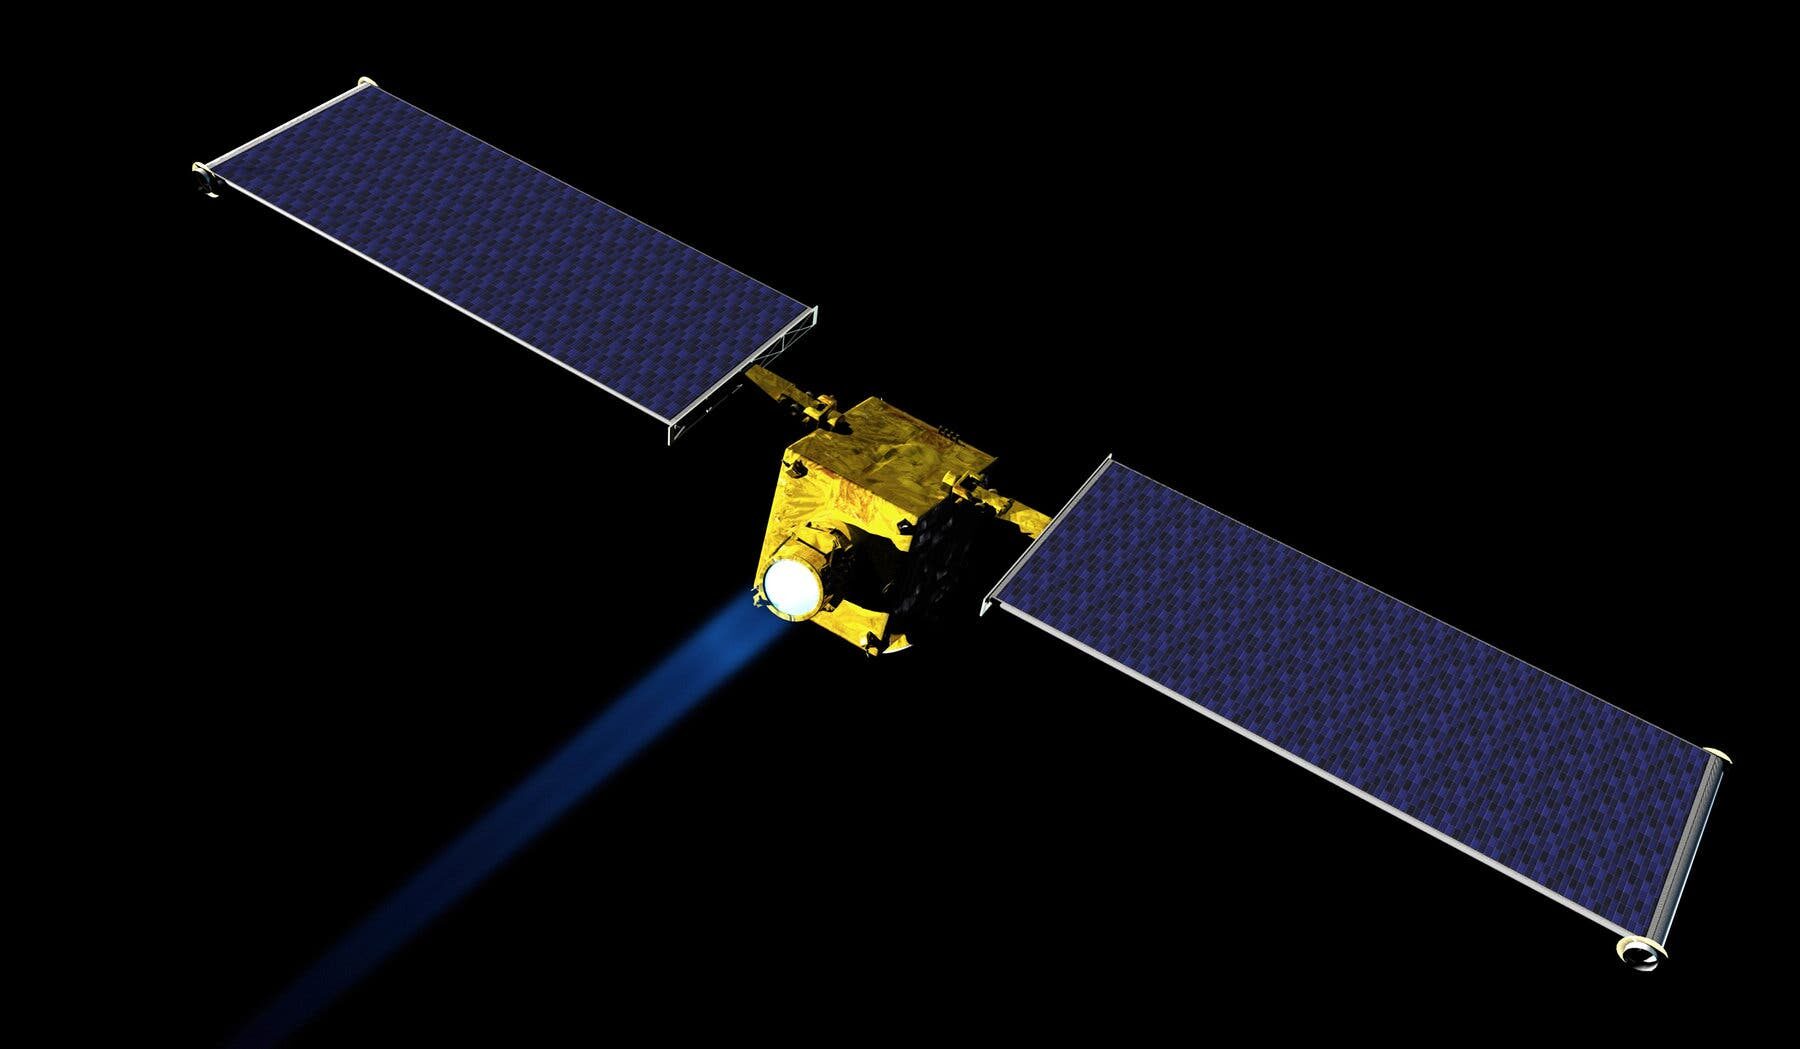 NASA's Double Asteroid Redirection Test spacecraft